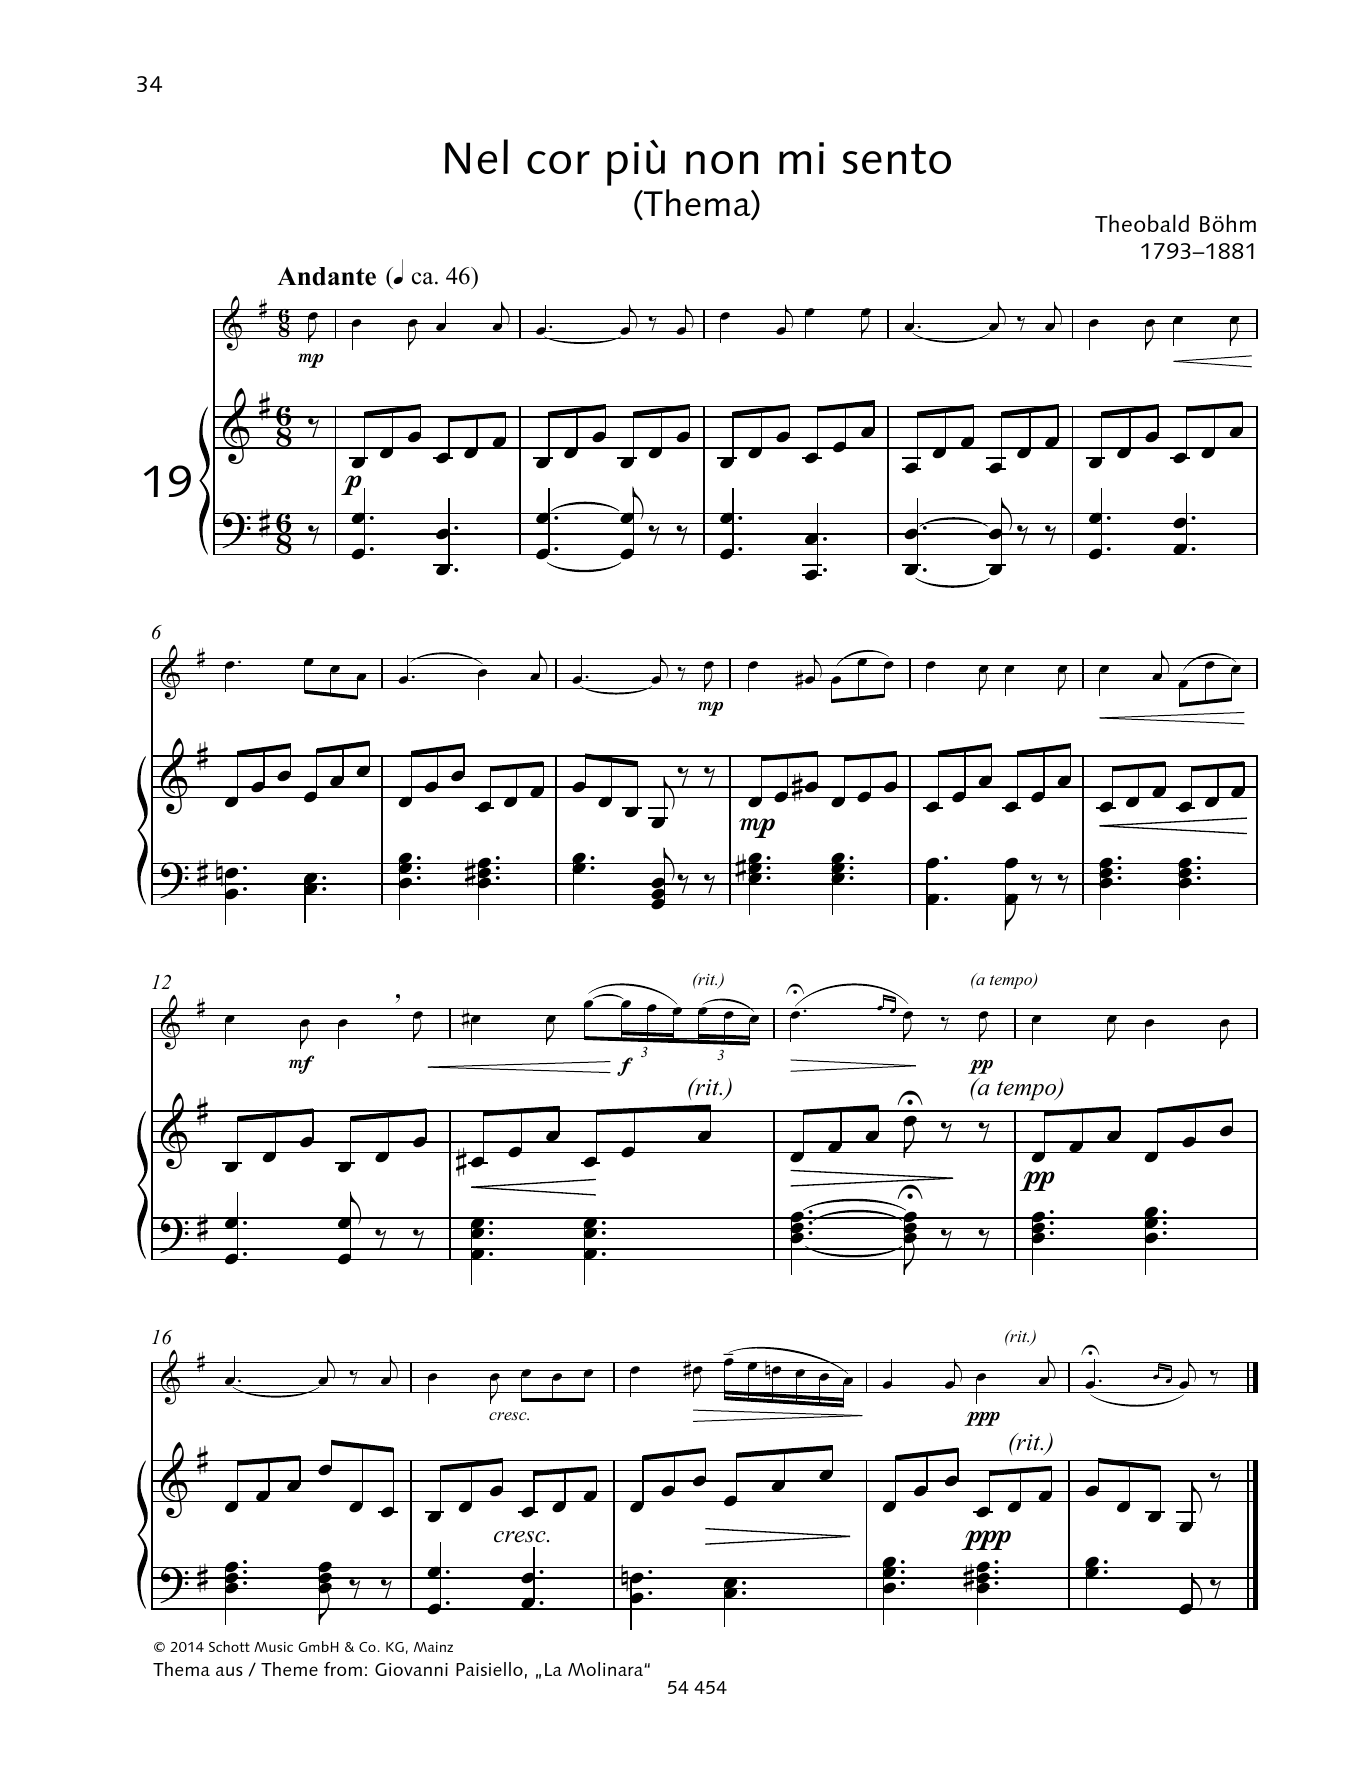 Theobald Böhm Nel Cor Più Non Mi Sento sheet music notes and chords arranged for Woodwind Solo